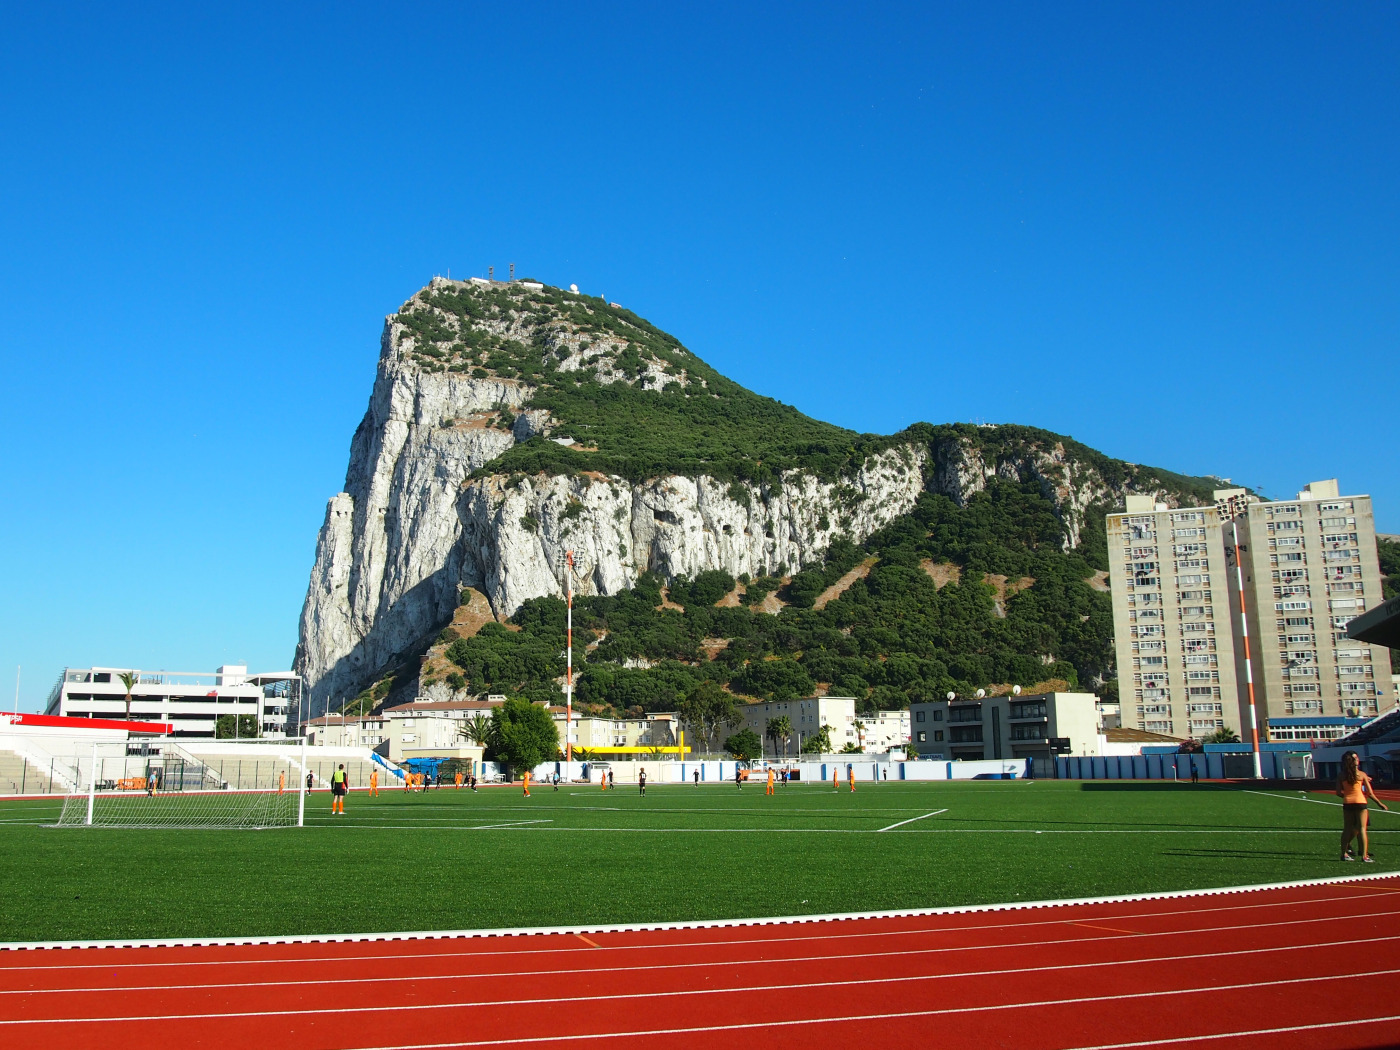 Spain-Gibraltar rivalry in football